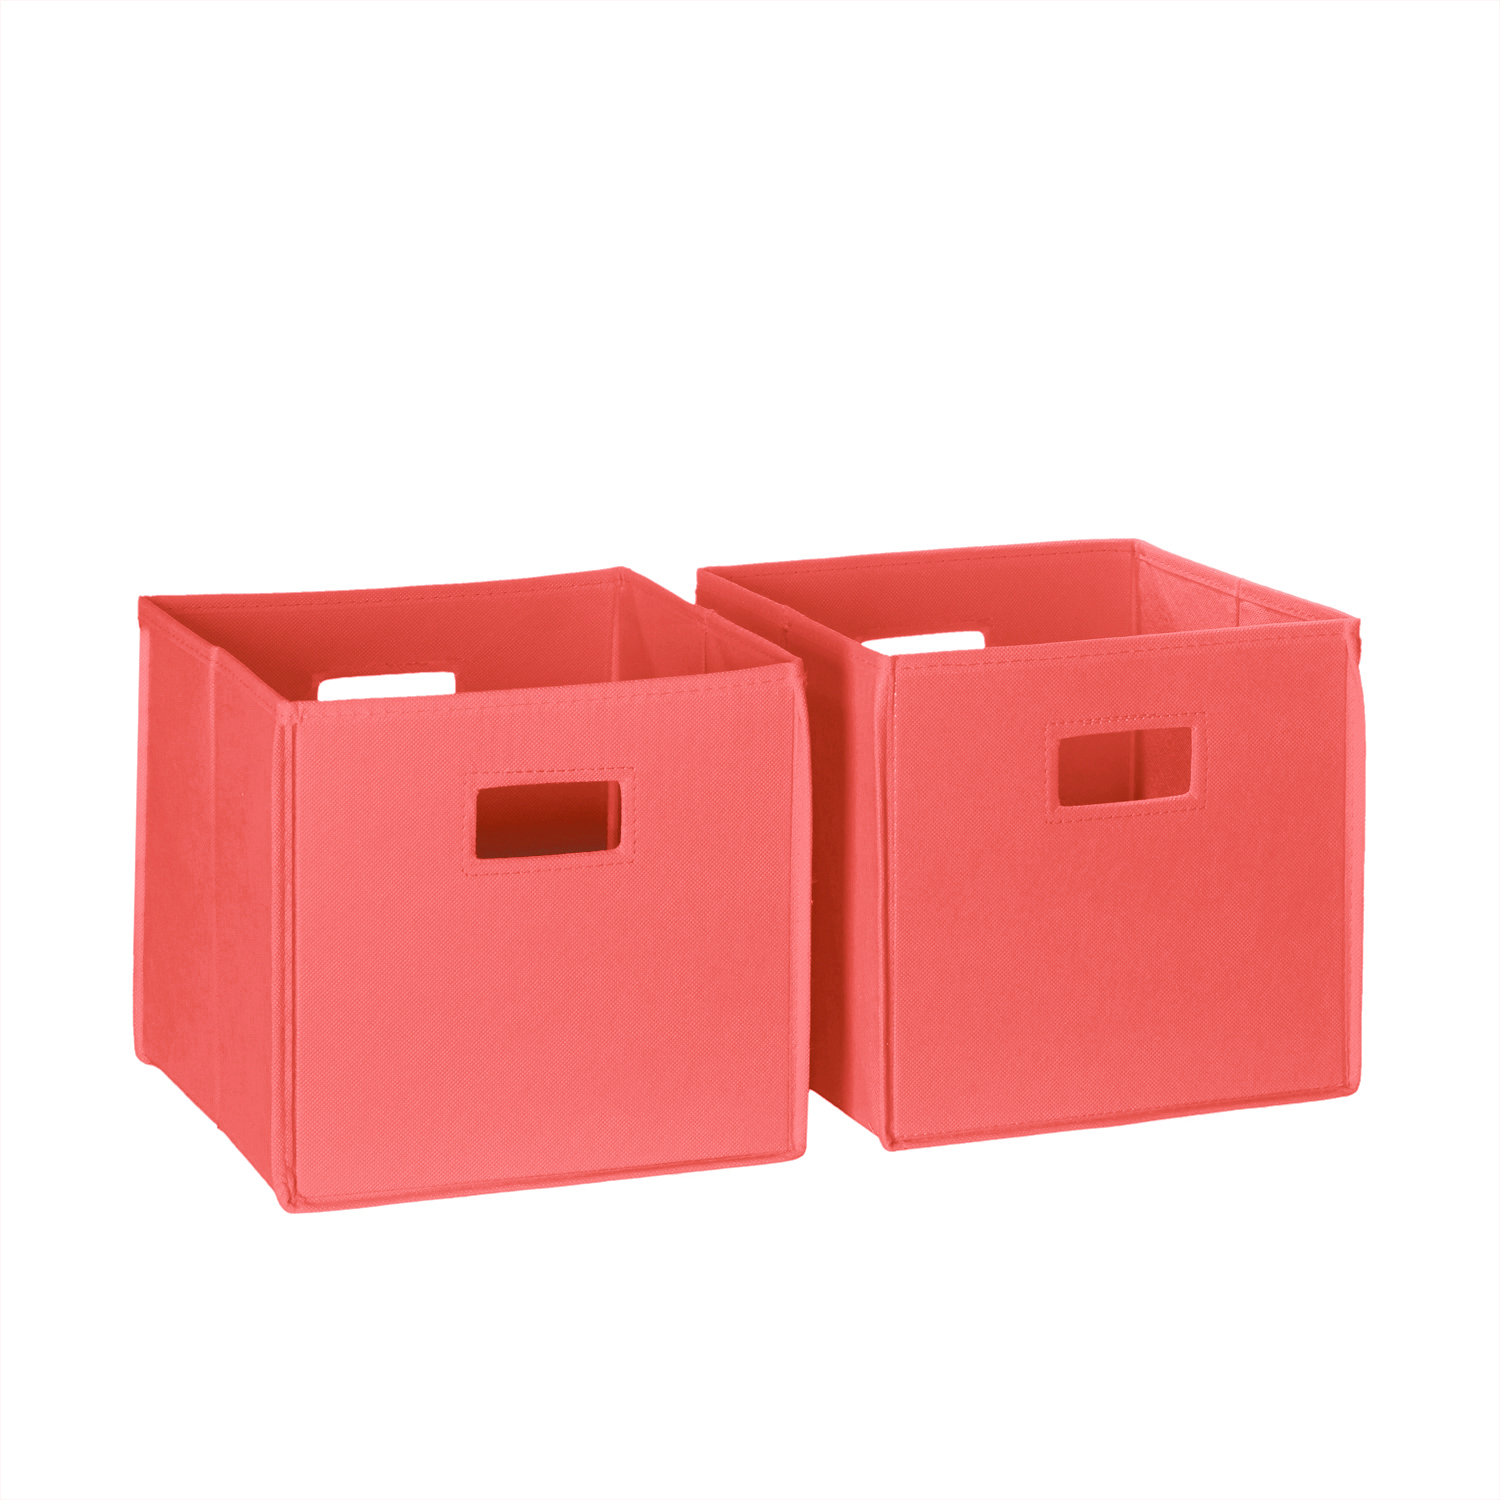 RiverRidge Home Folding Fabric Cube Storage Bin Set of 2 - Coral - image 1 of 11